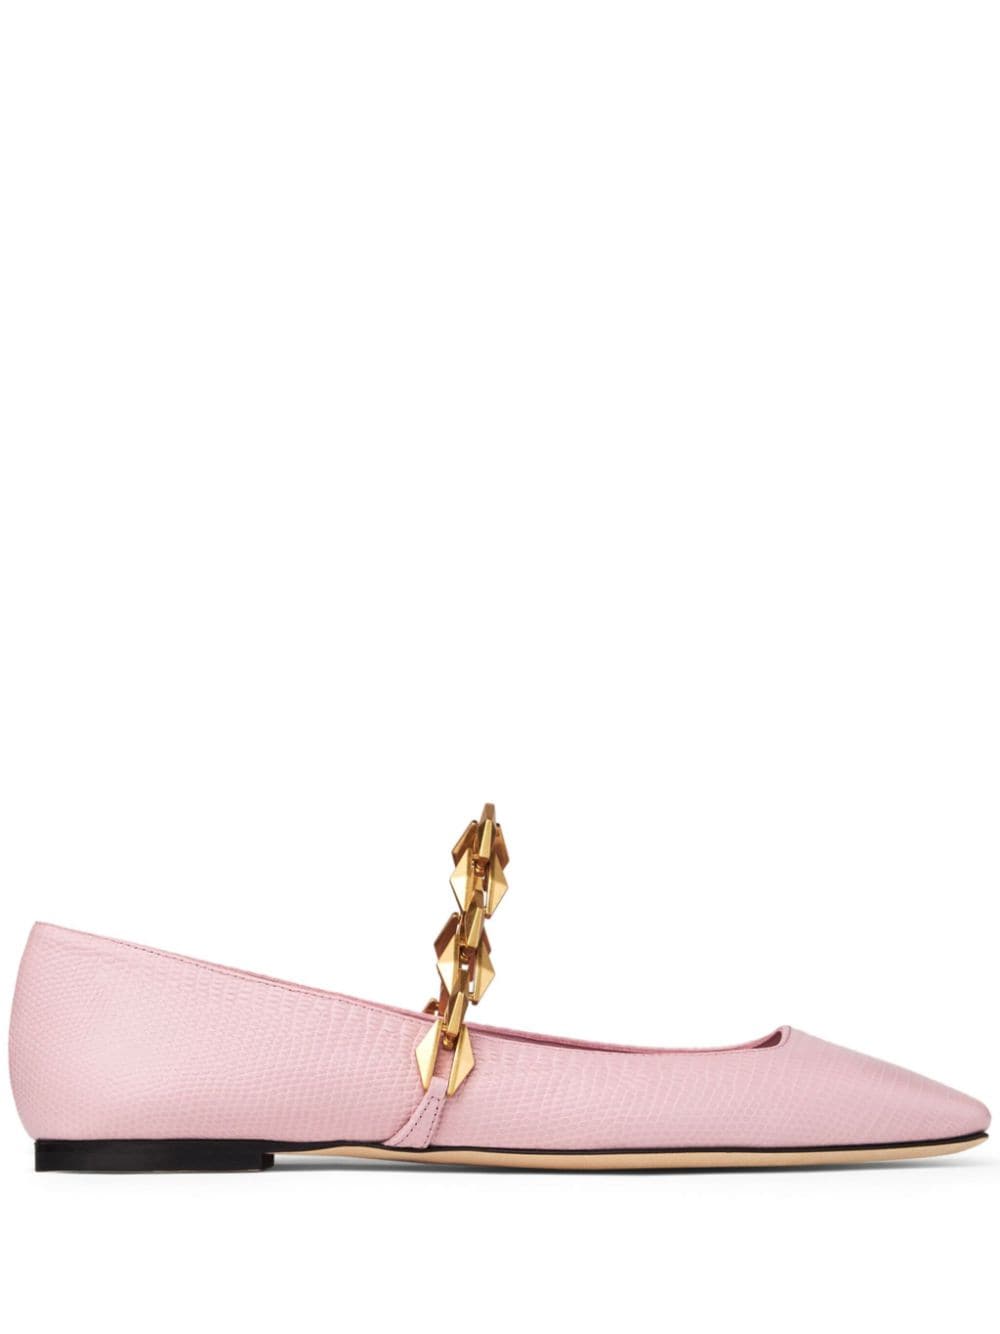 Jimmy Choo Diamond Tilda leather ballerina shoes Pink